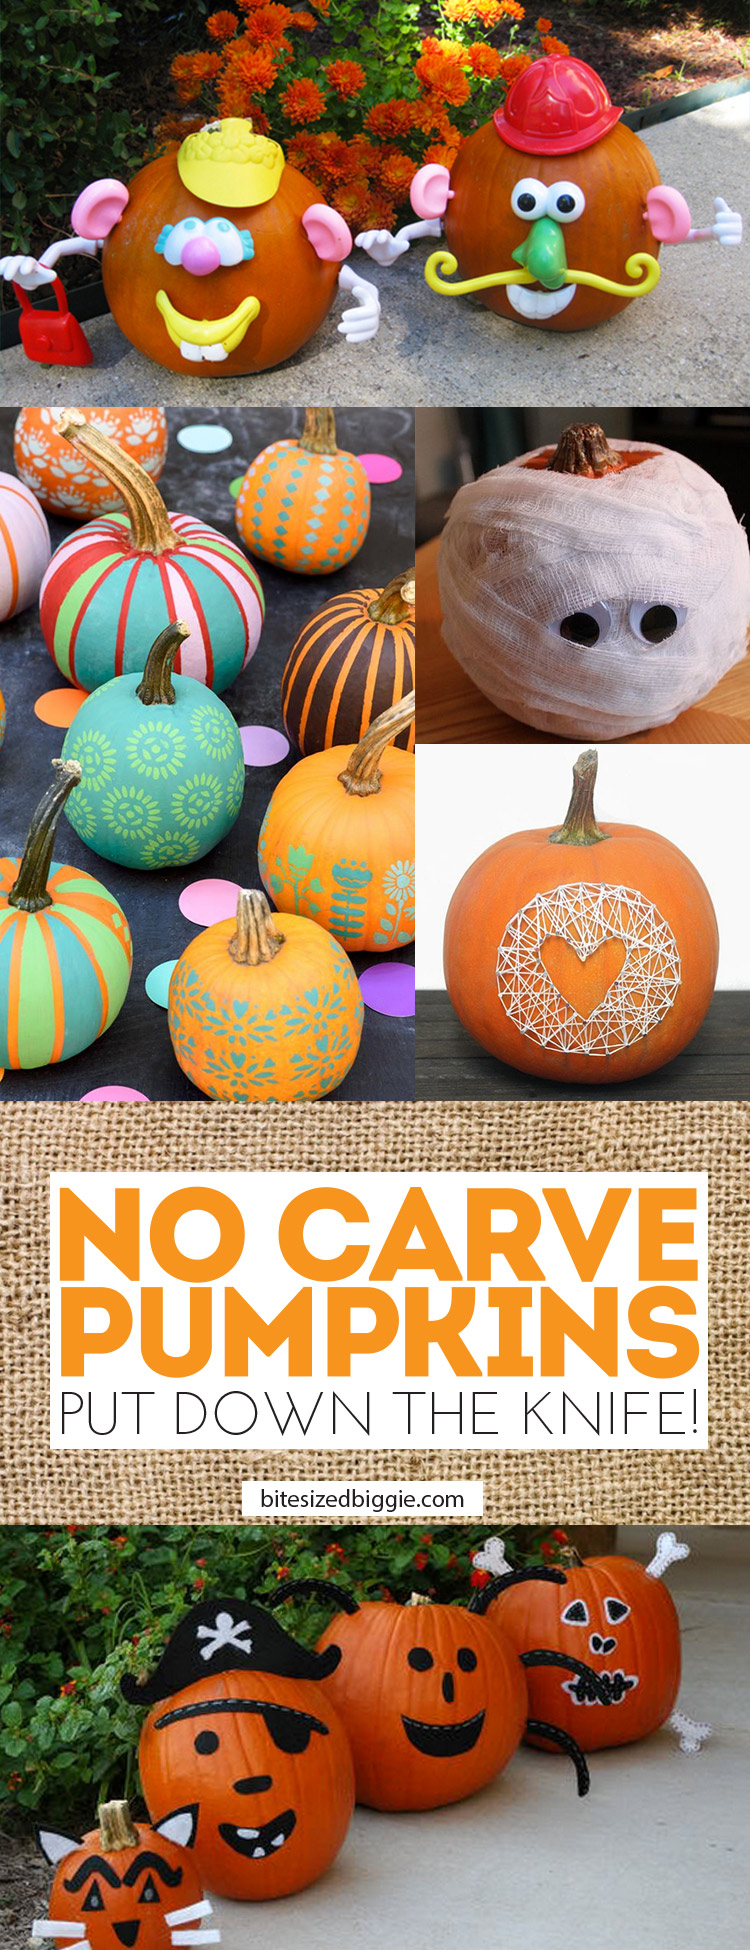 No-carve-pumpkins-PUT-DOWN-THAT-KNIFE-Hahahaha